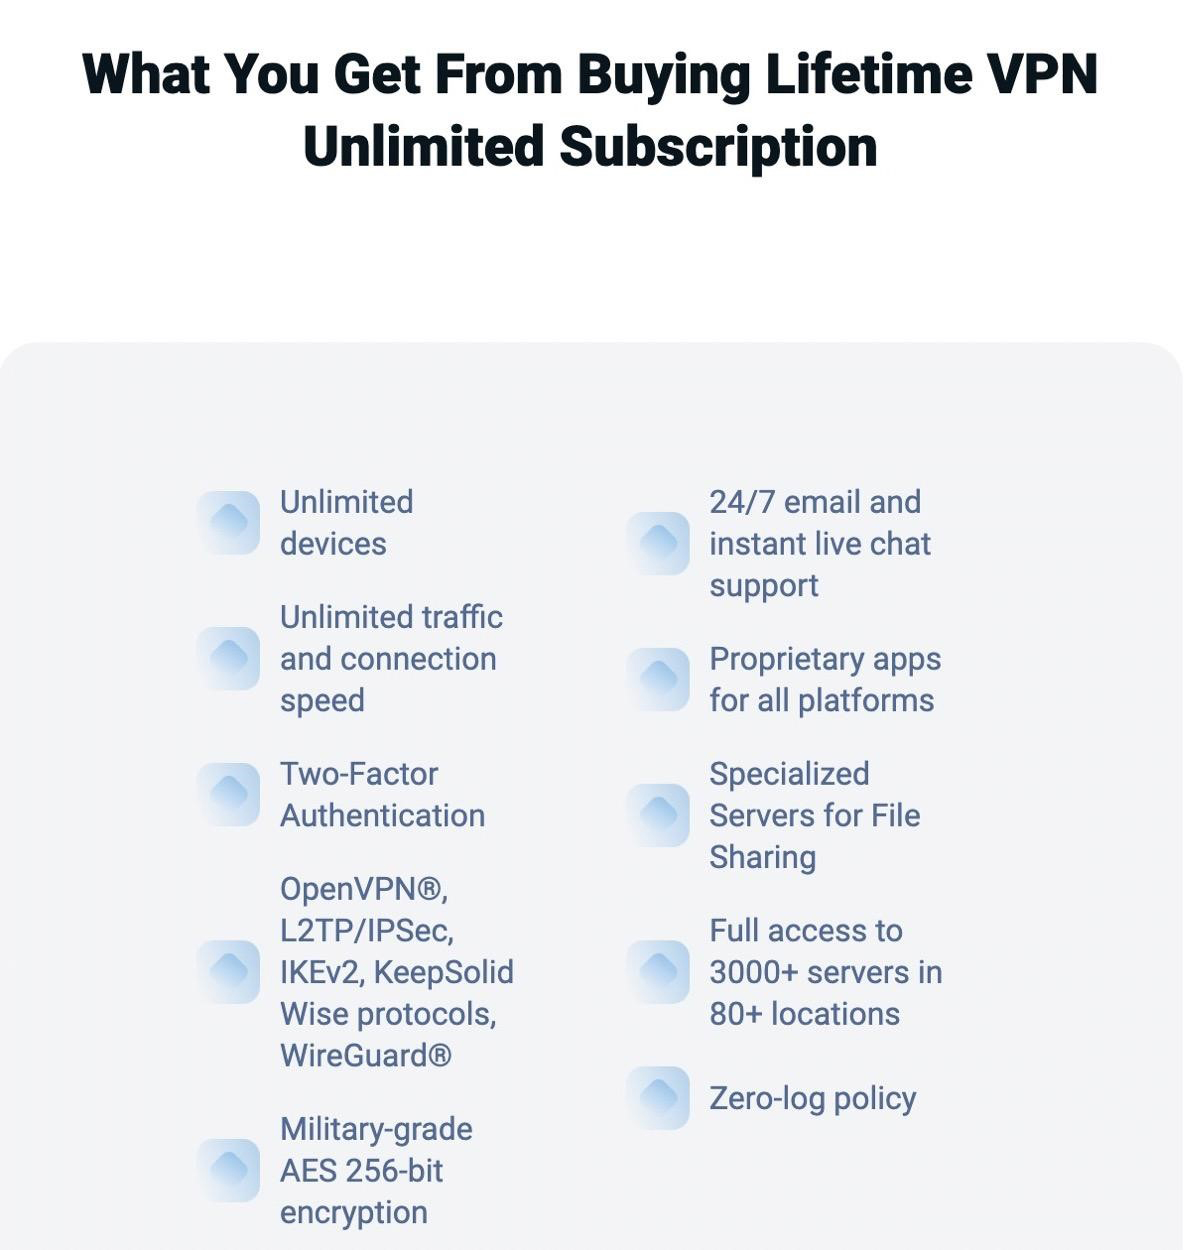 Benefits of VPN Unlimited Lifetime Subscription